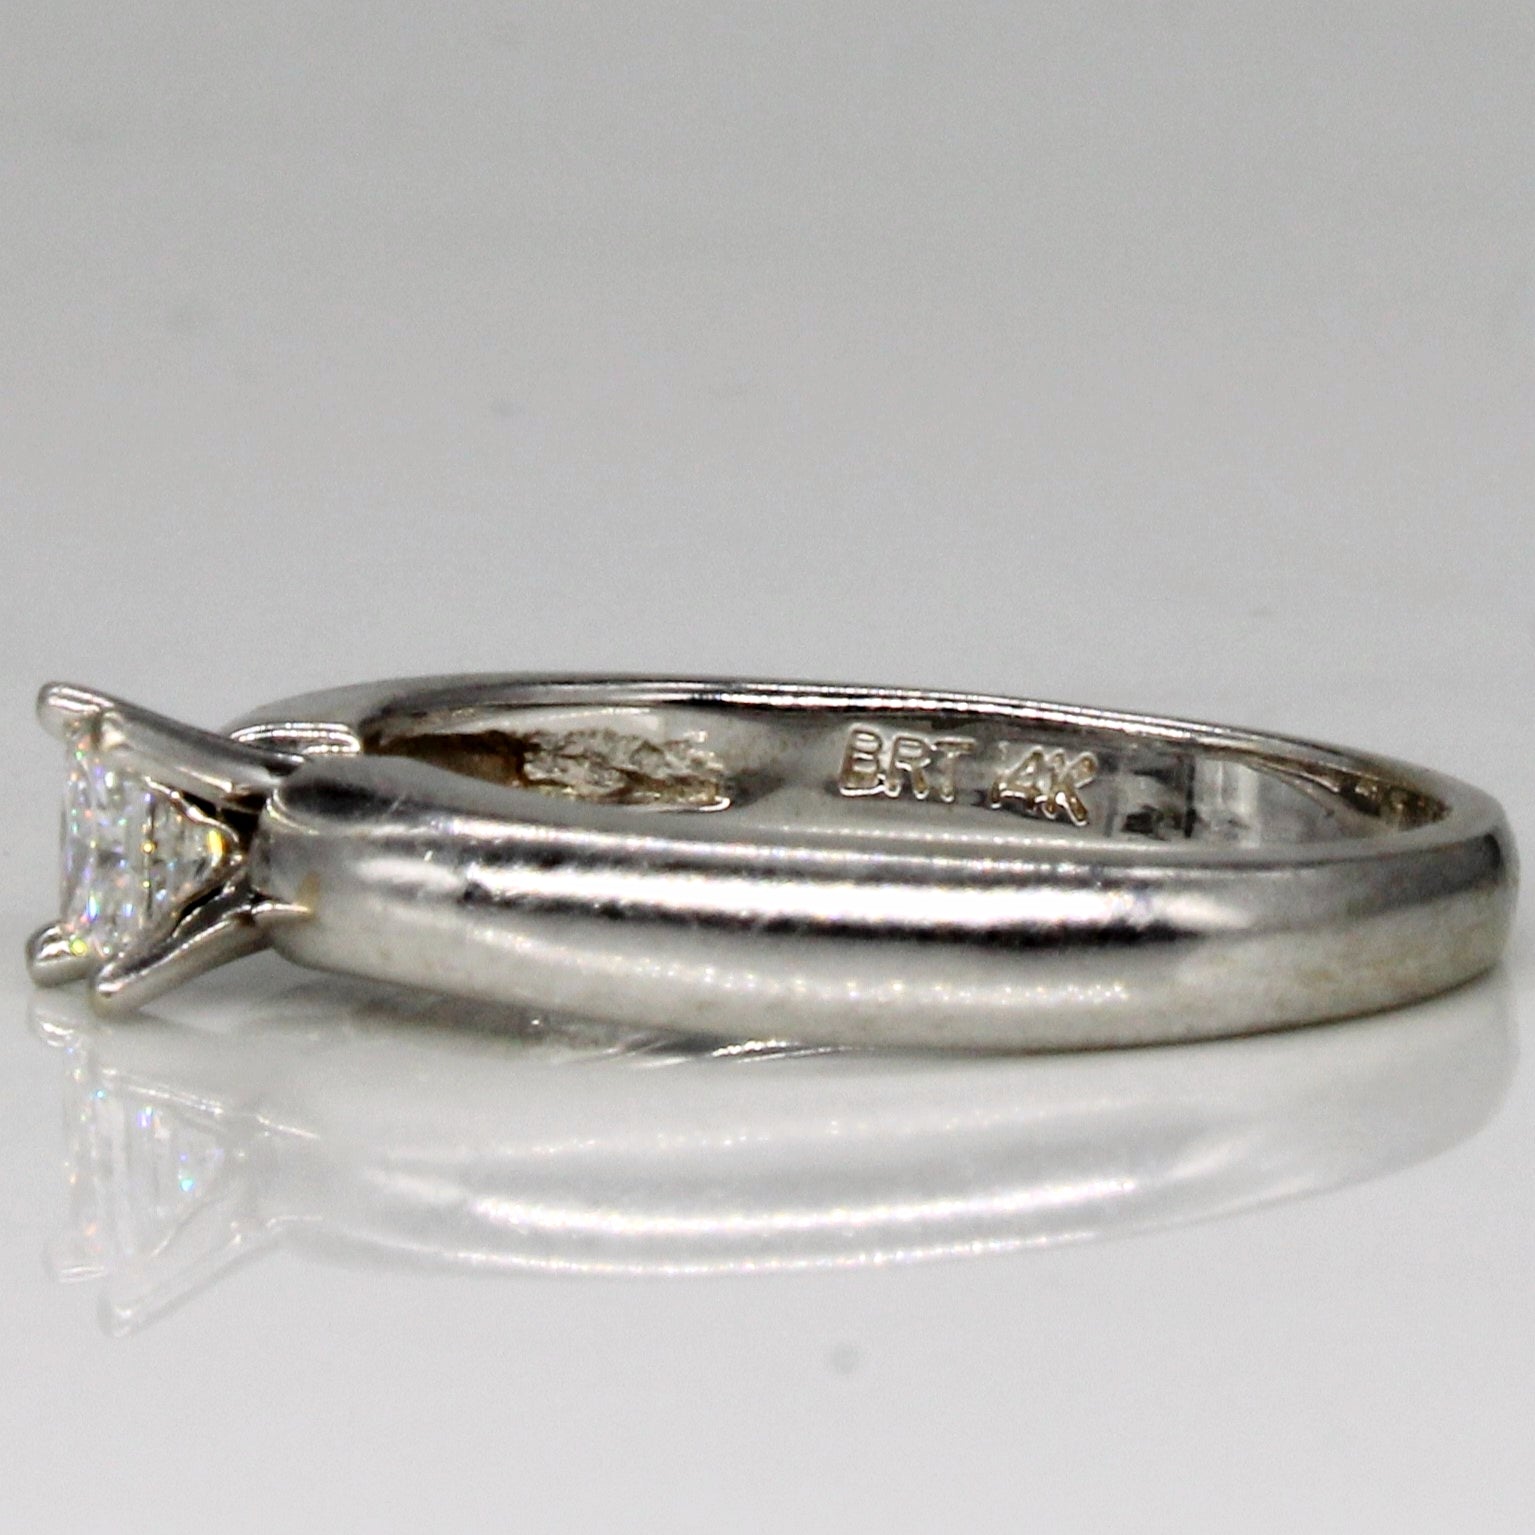 Princess Cut Diamond Engagement Ring | 0.25ct | SZ 6.5 |